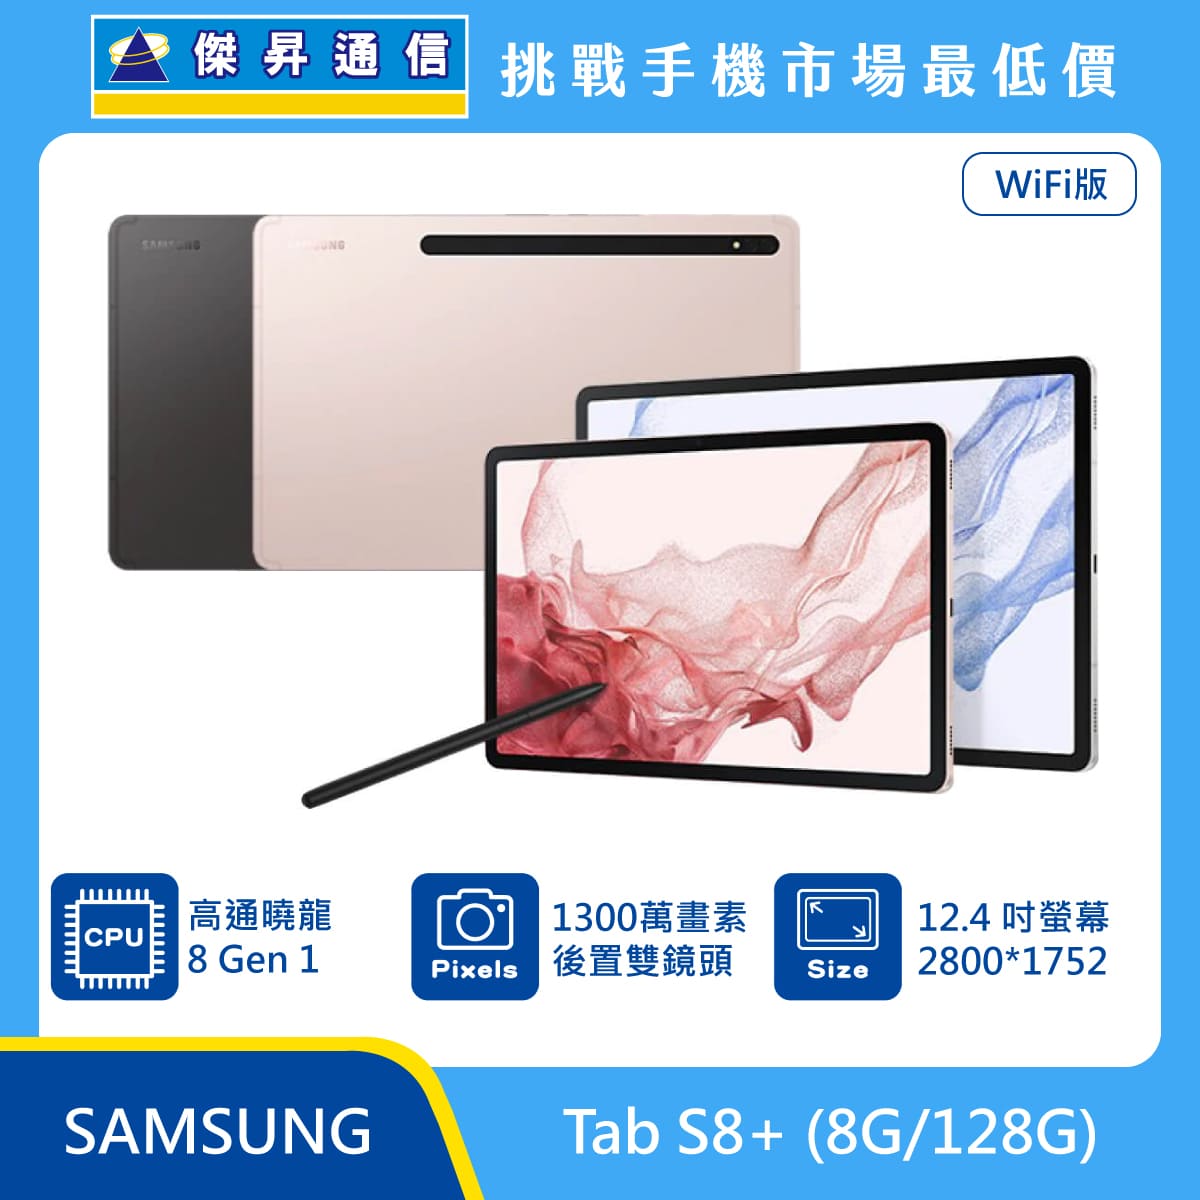 SAMSUNG 平板 Tab S8+ Wi-Fi (8G/128G)